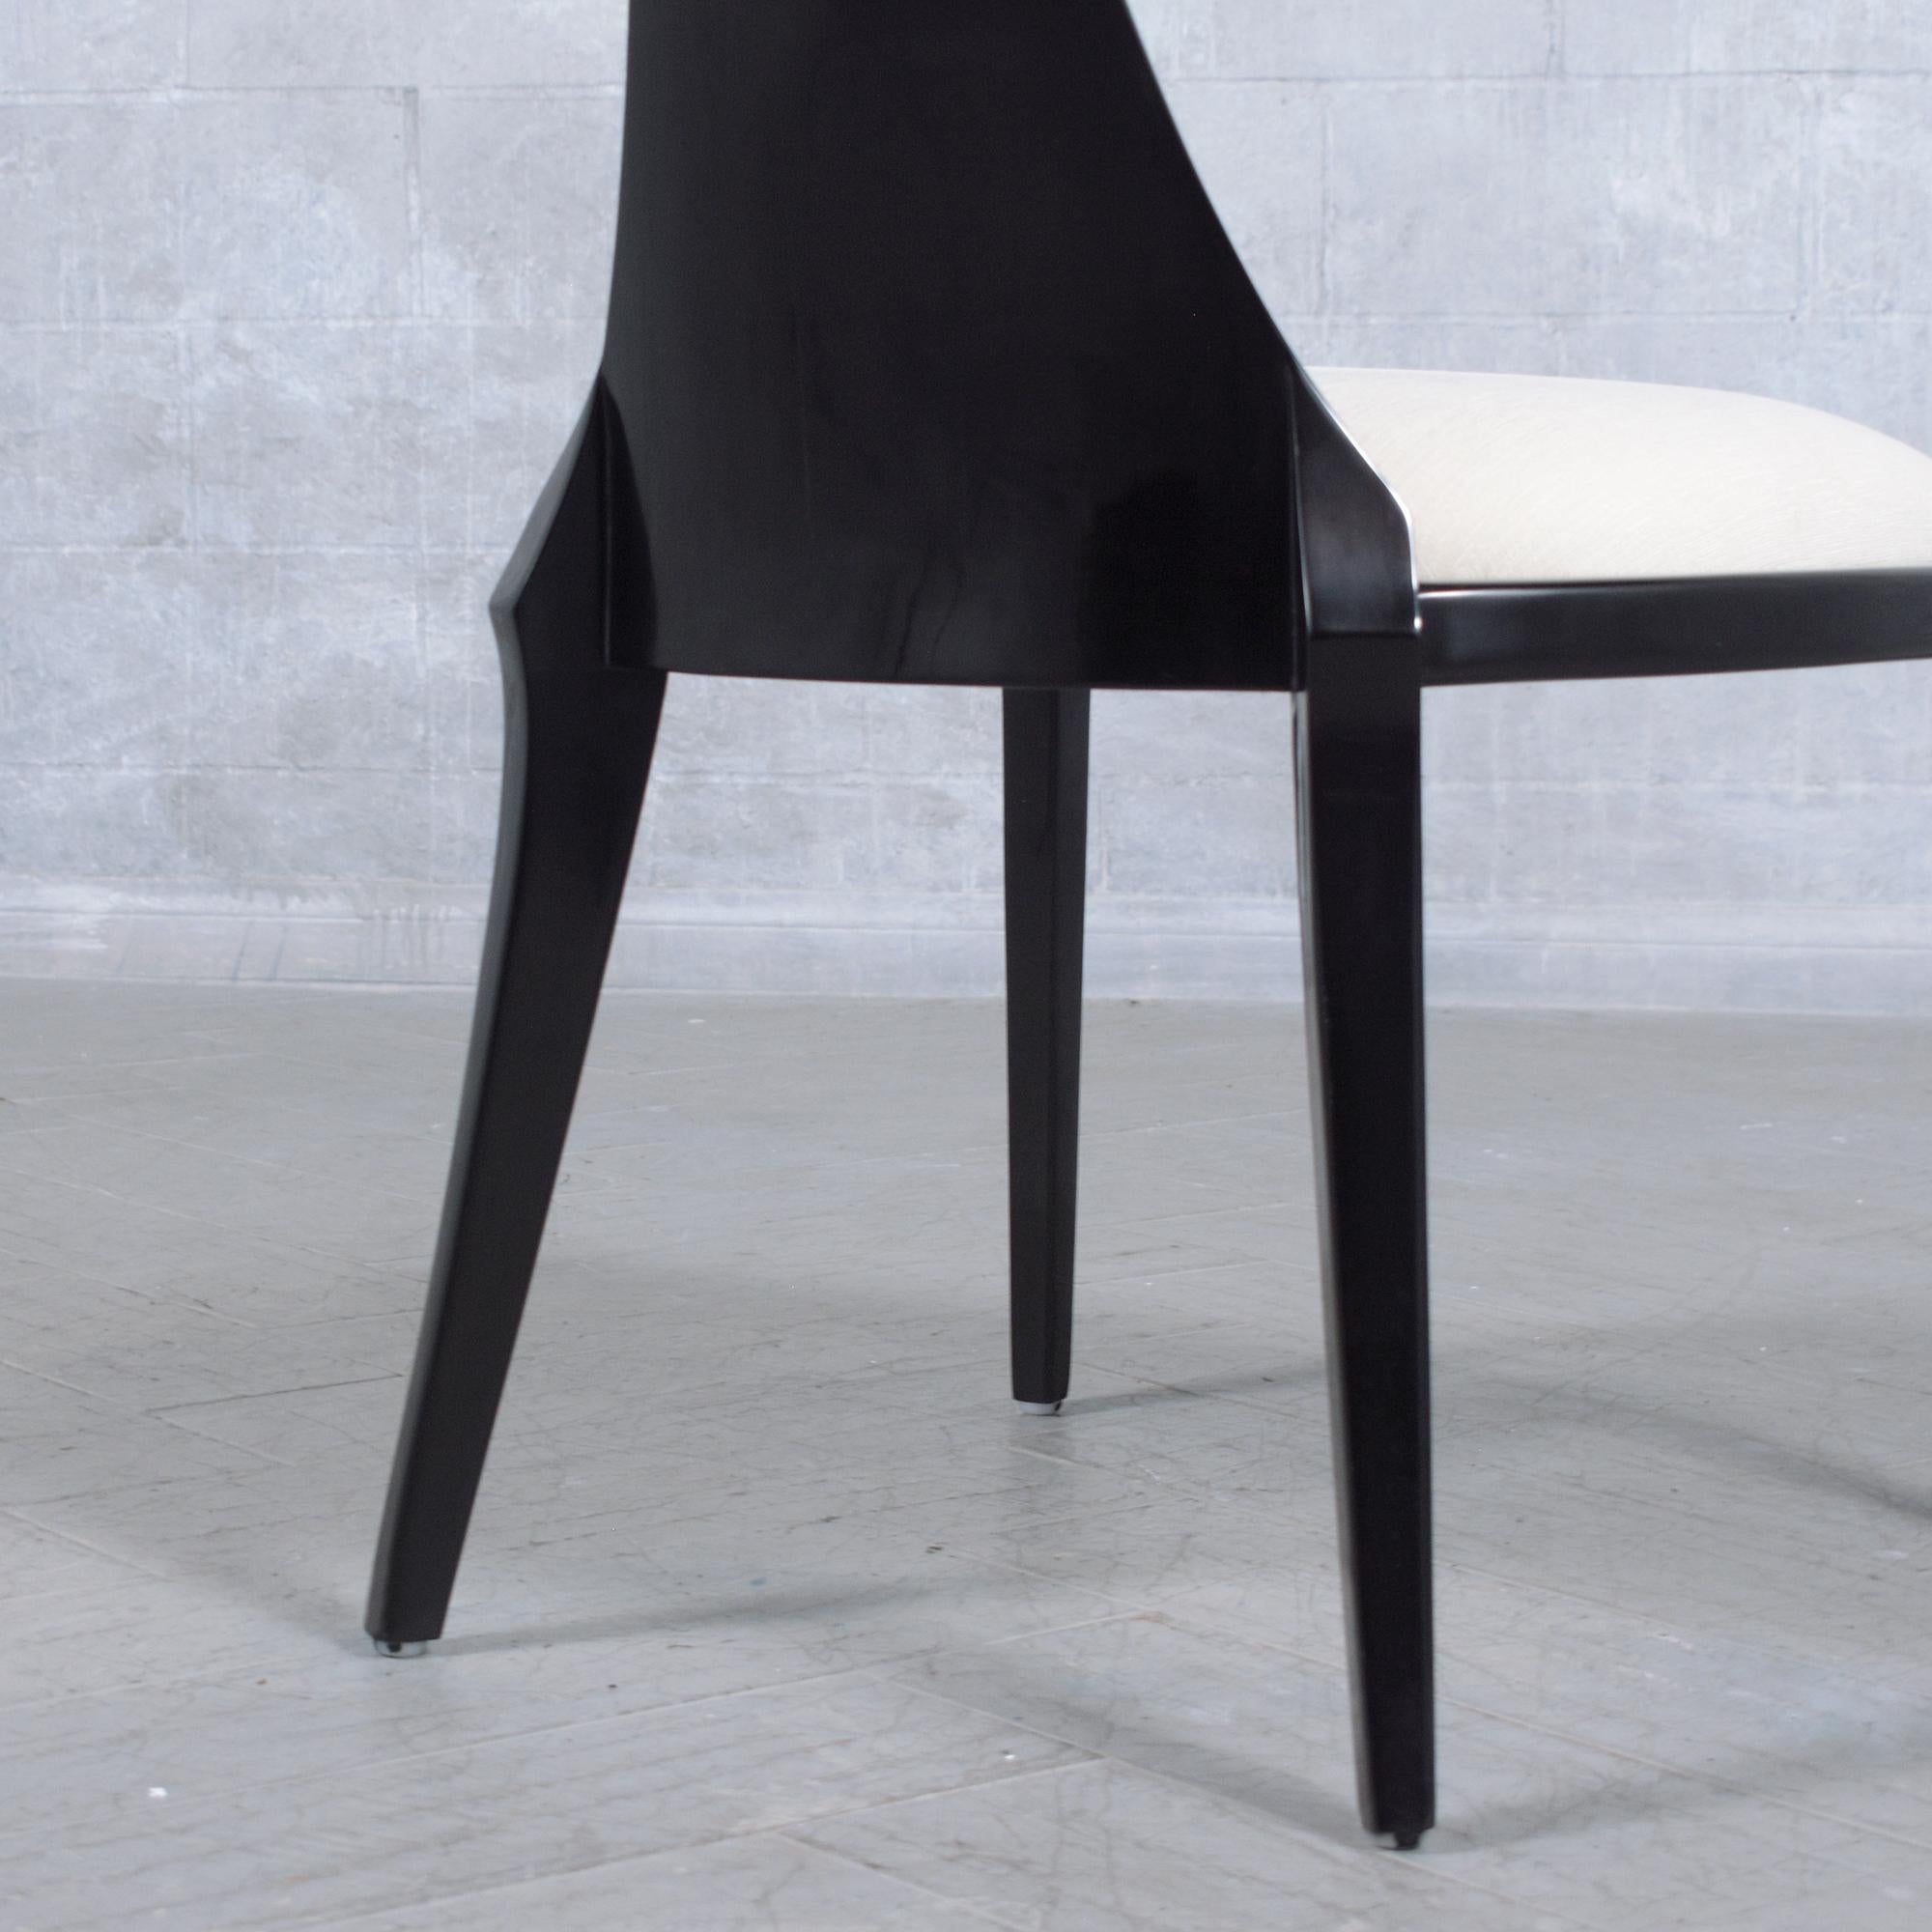 Ebonized Modernism Side Chair: Refinished Bent Wood with High Backrest Design For Sale 4